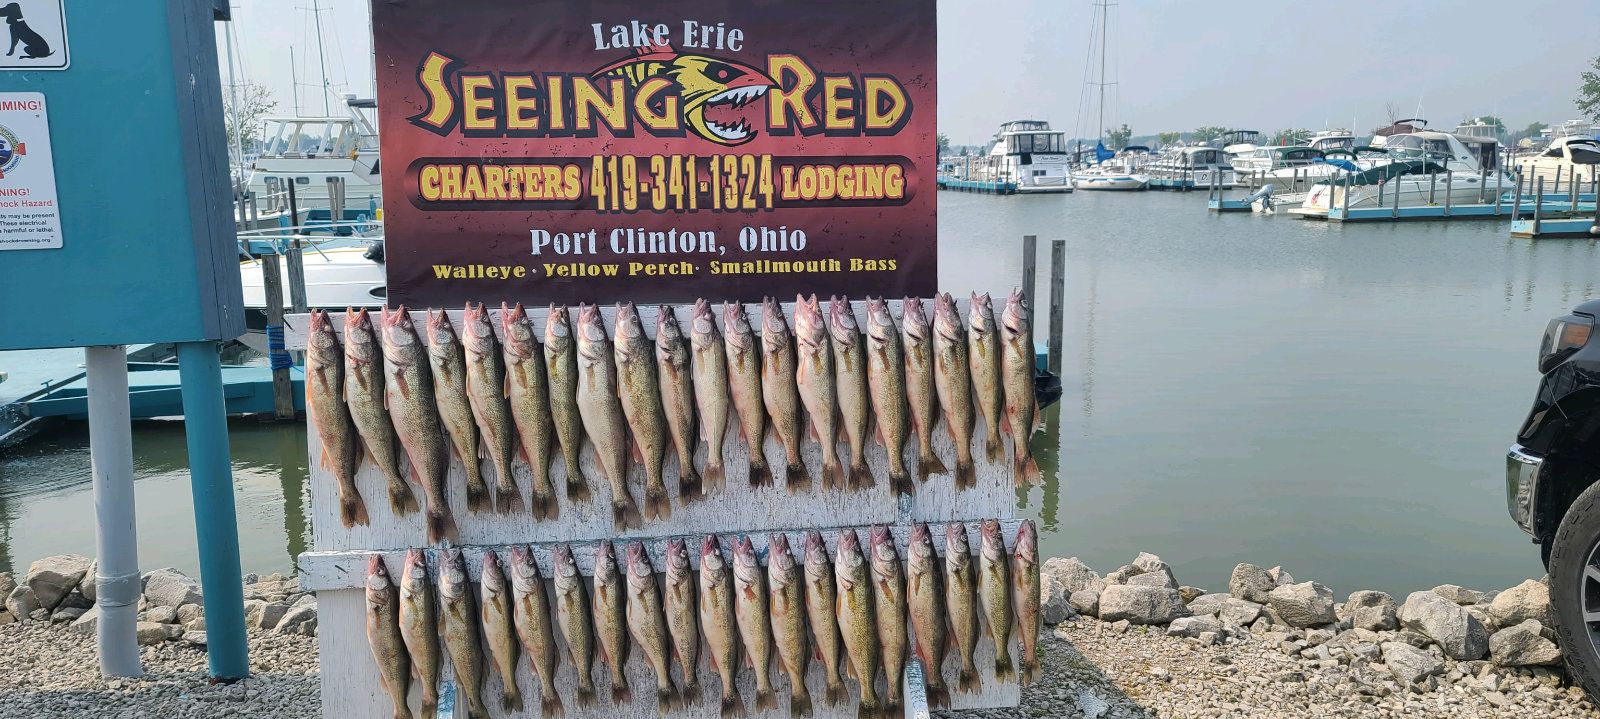 Seeing Red Charters Lake Erie Fishing Charters | 4 Hour Night Charter Trip fishing Lake